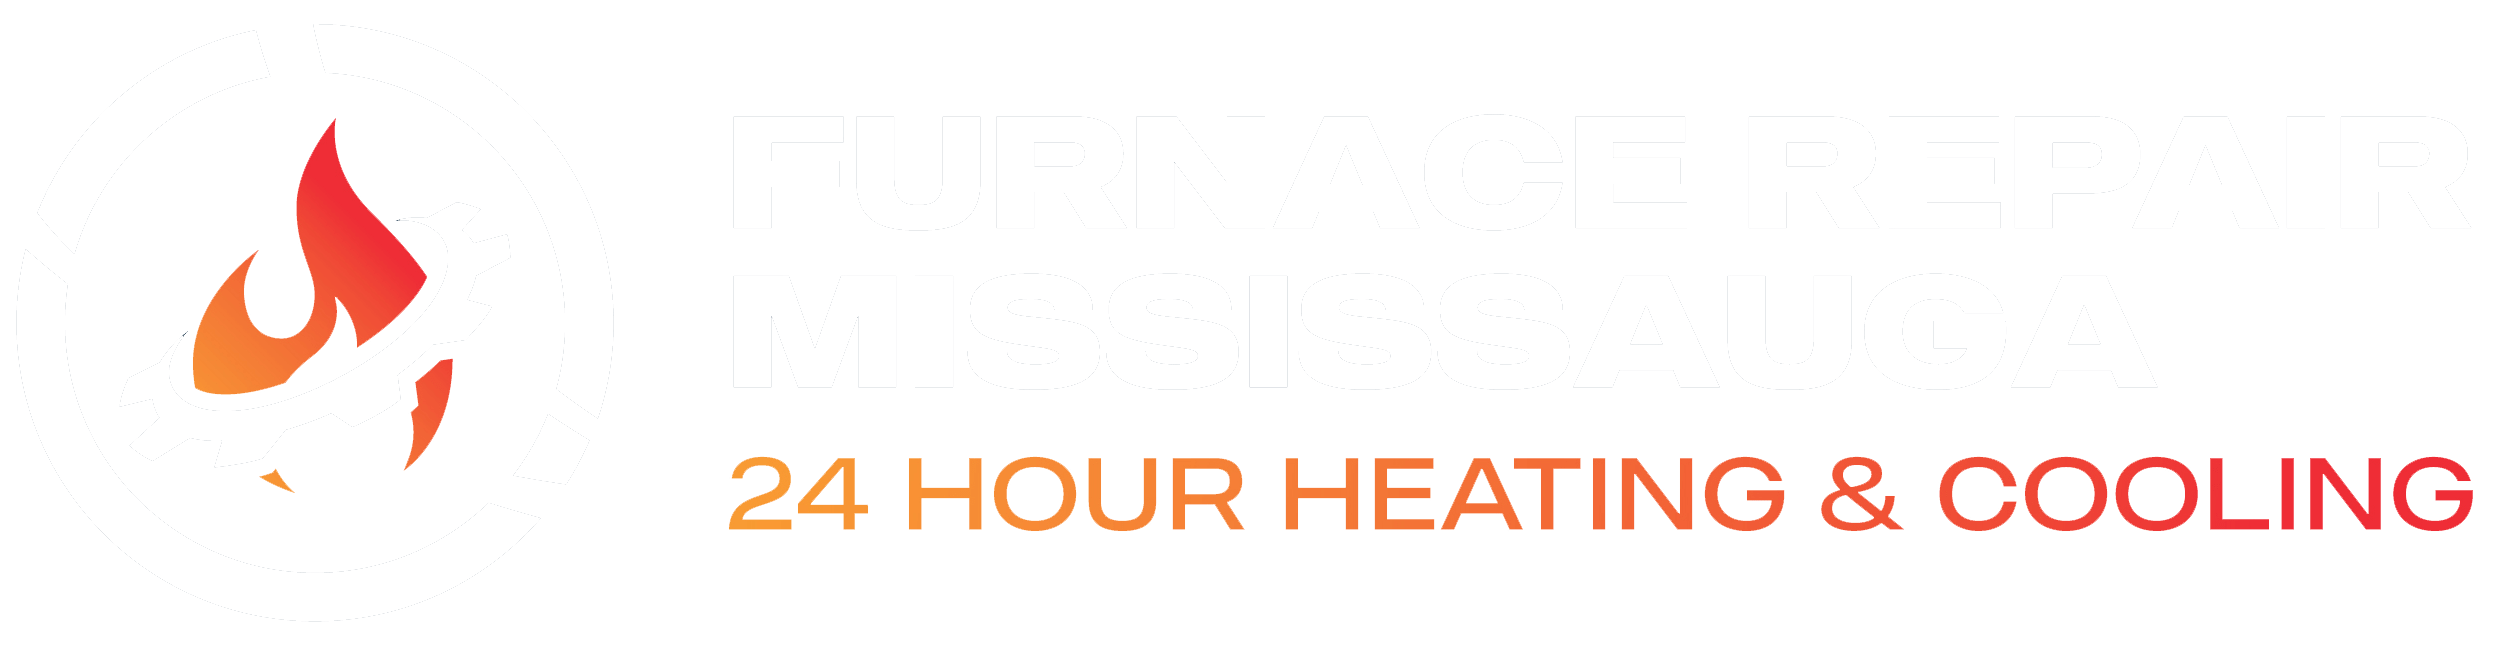 Best Furnace Repair in Mississauga